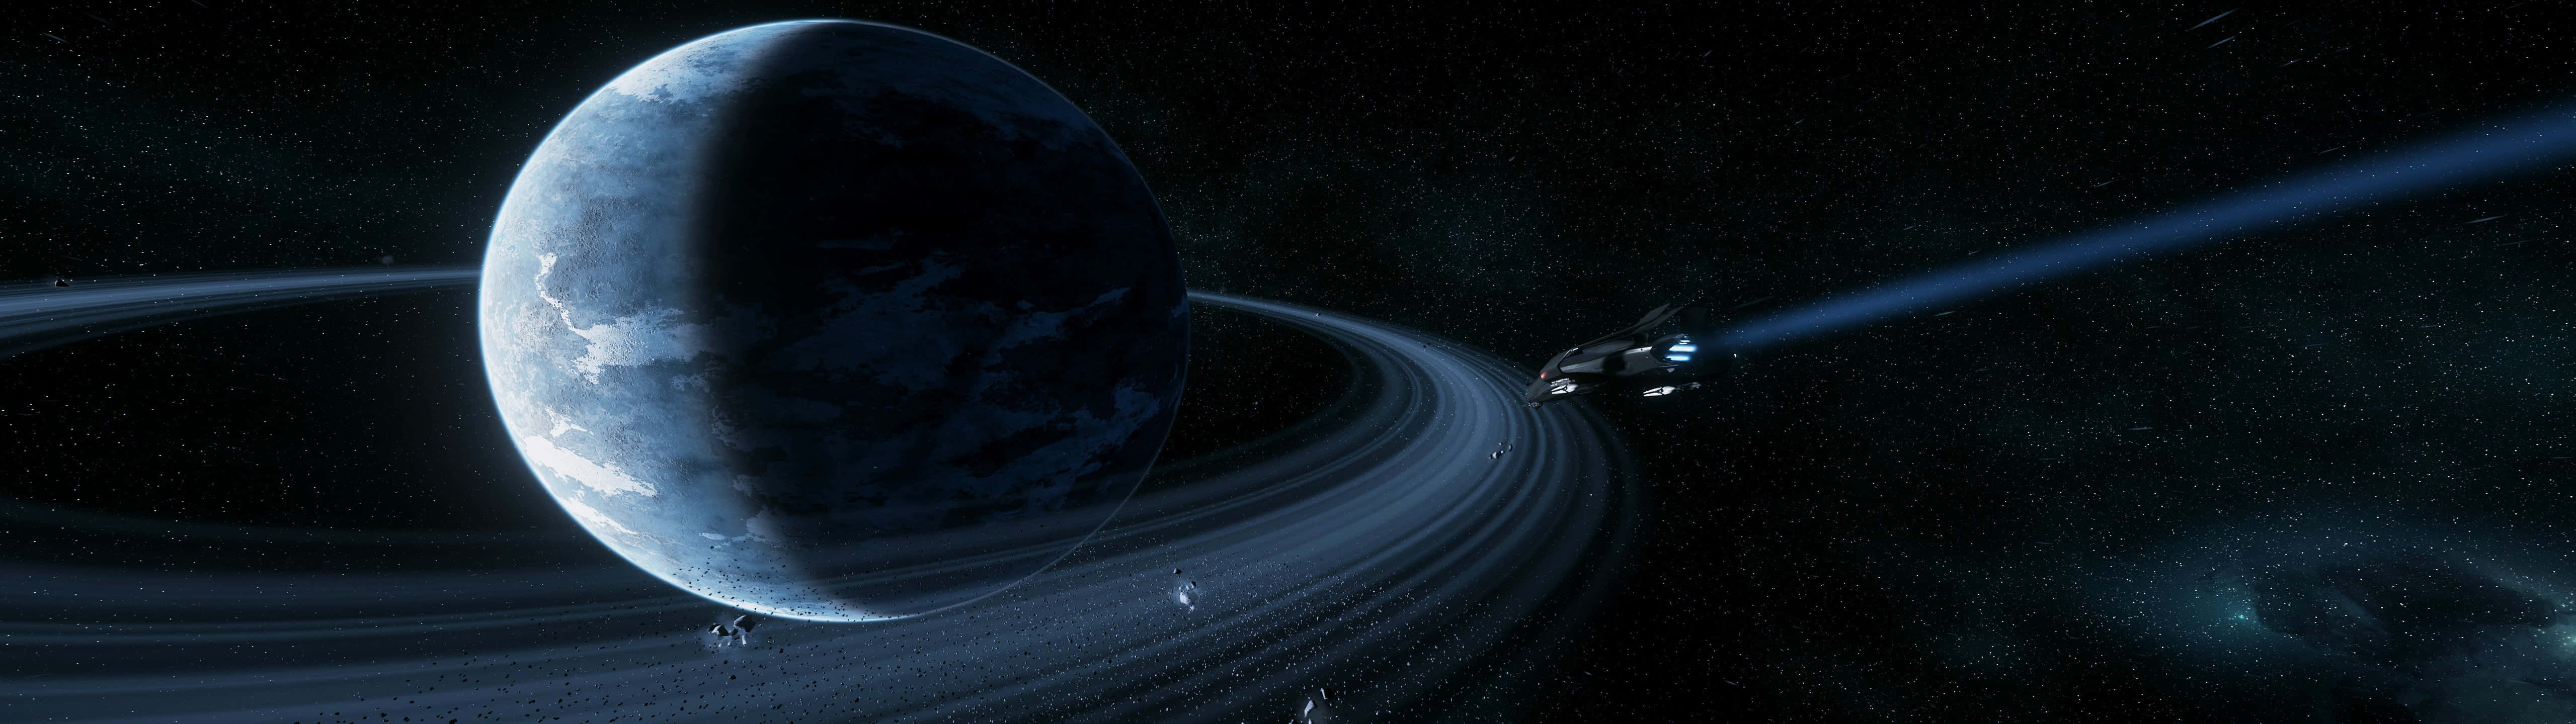 Spacecraft Orbiting Planet Rings Super Ultra Wide Wallpaper